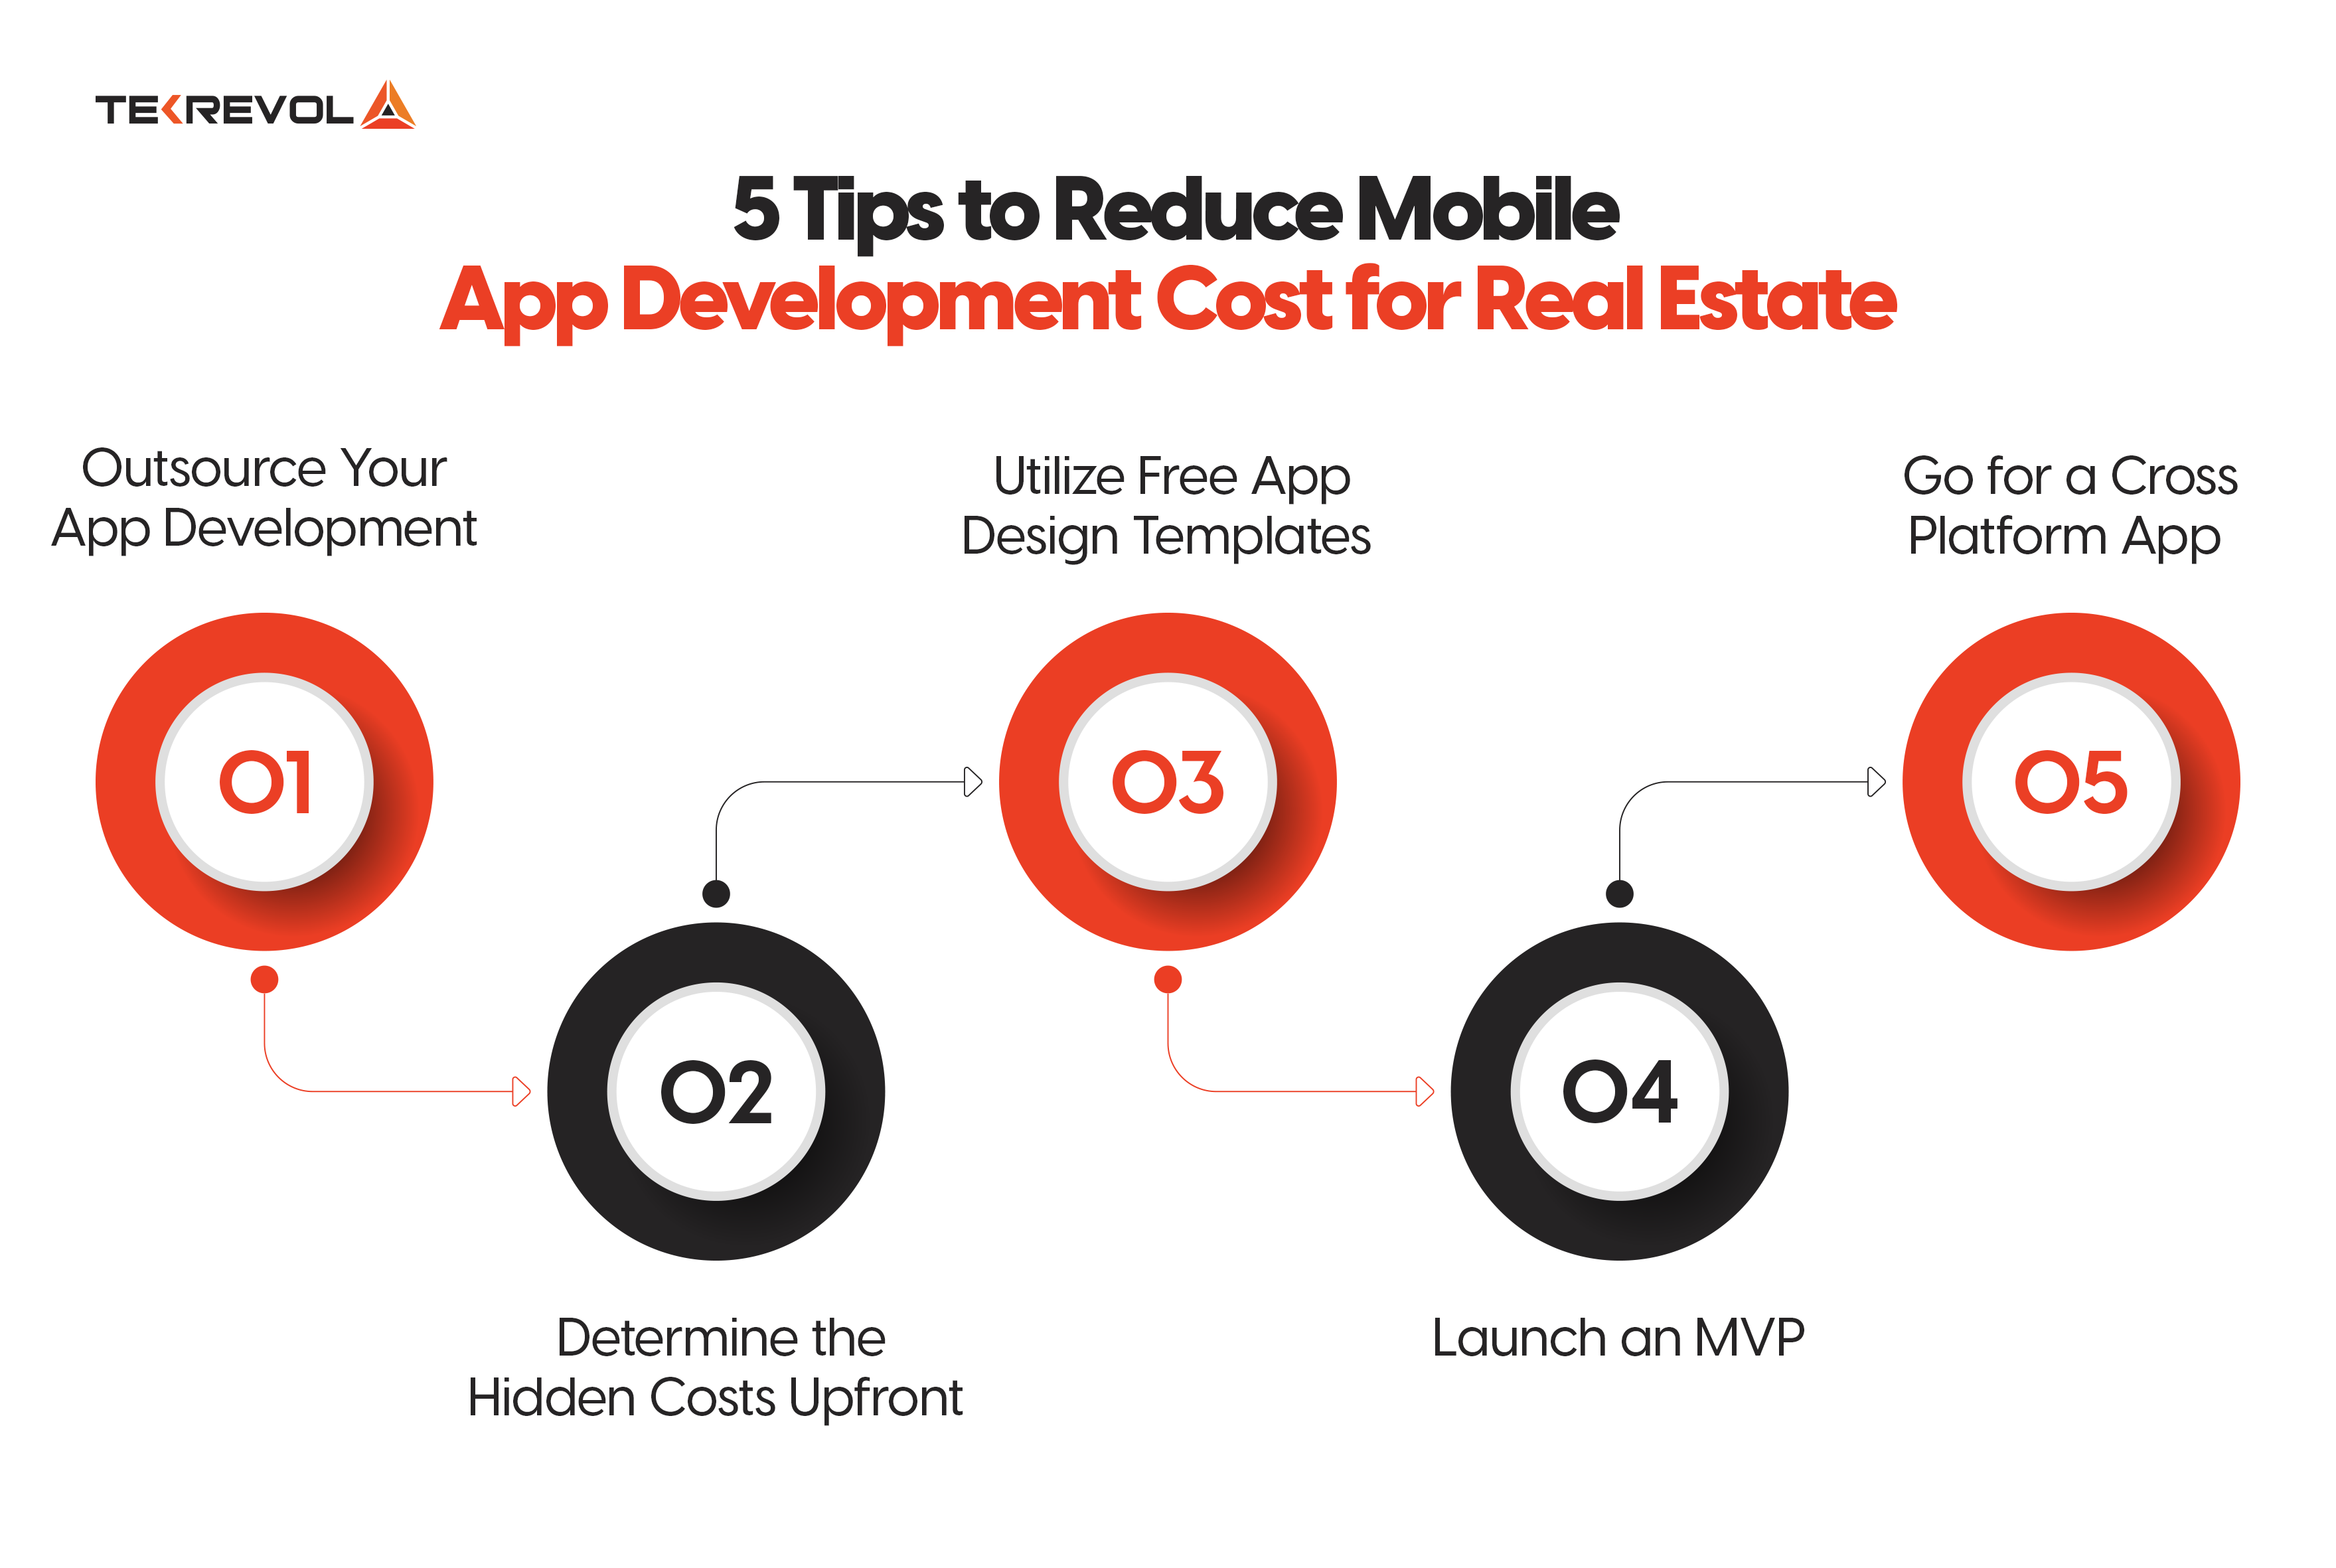 real estate app development cost